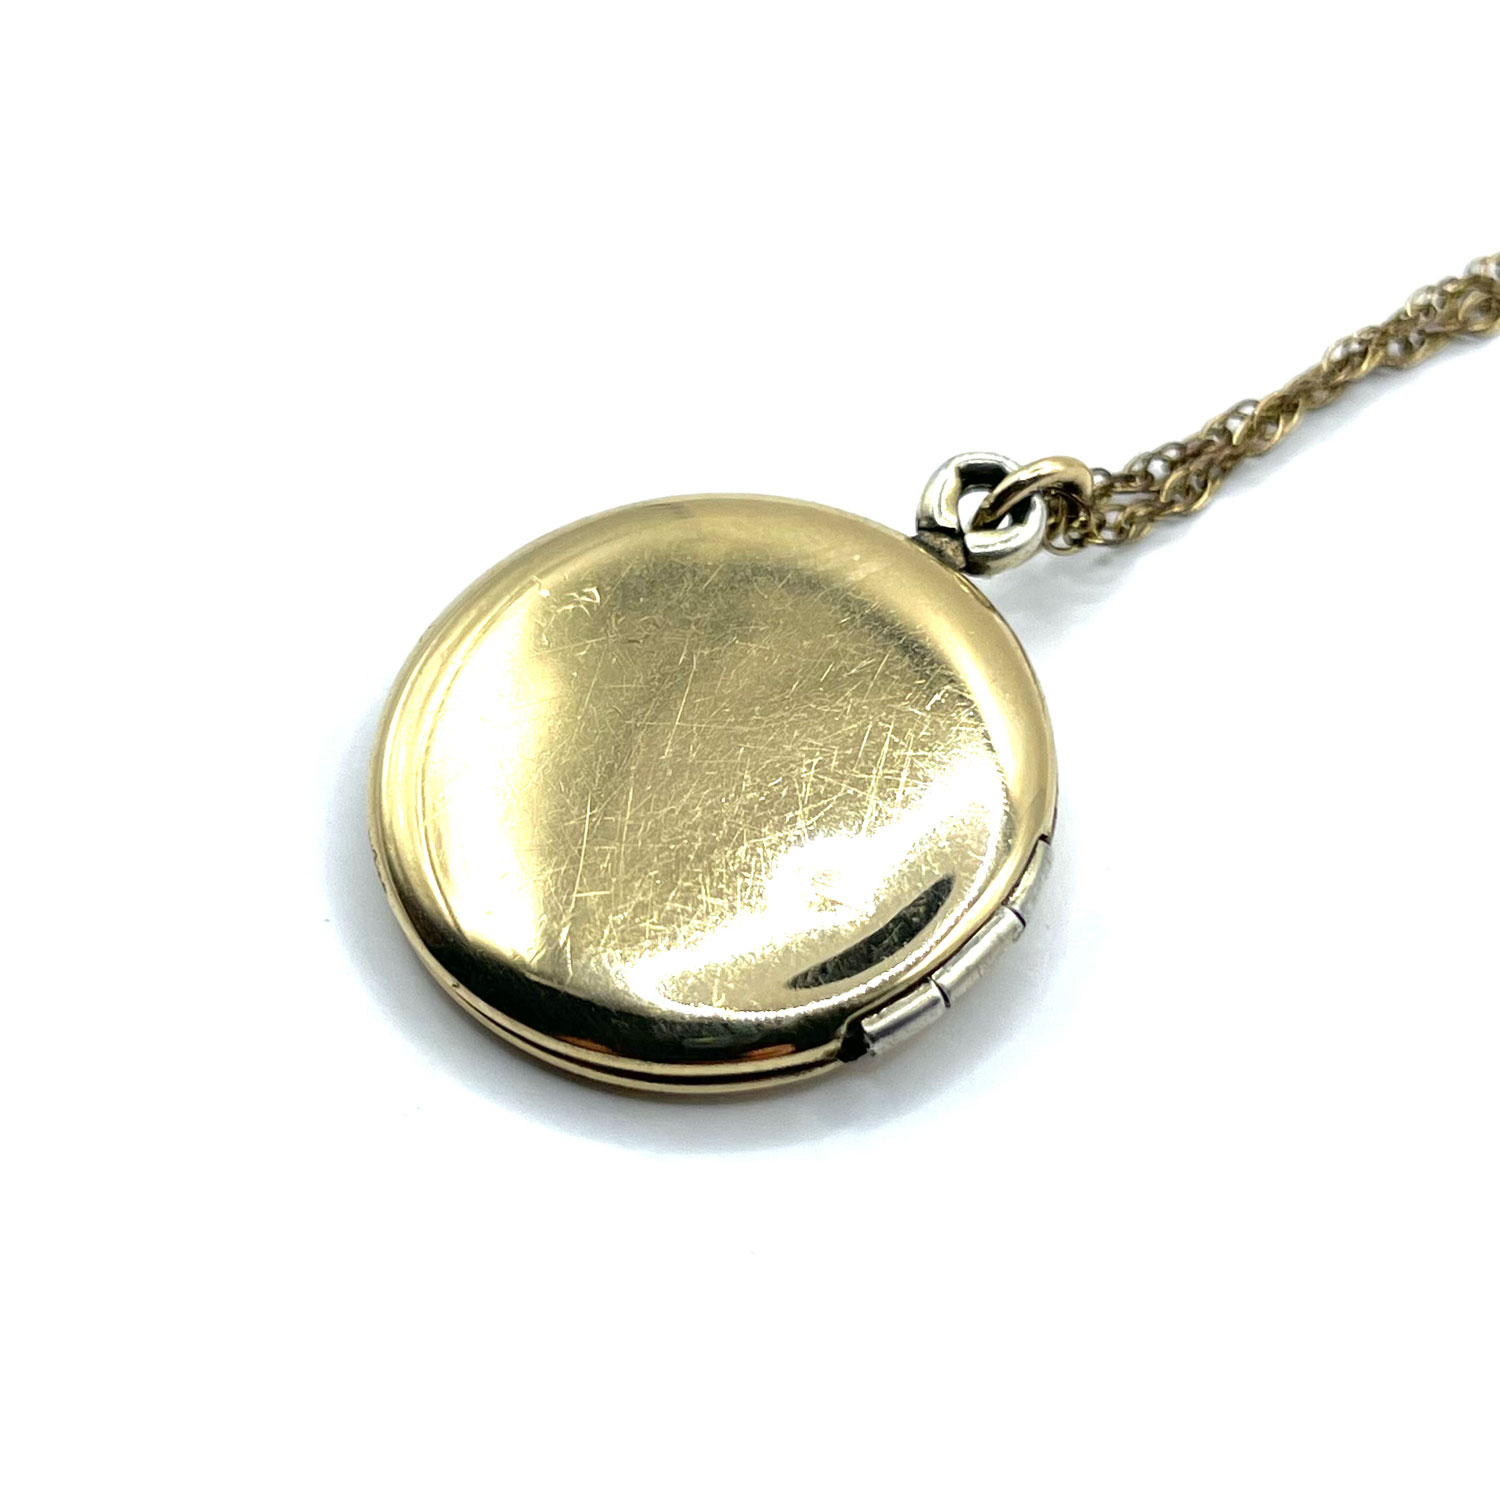 Antique locket pendant necklace